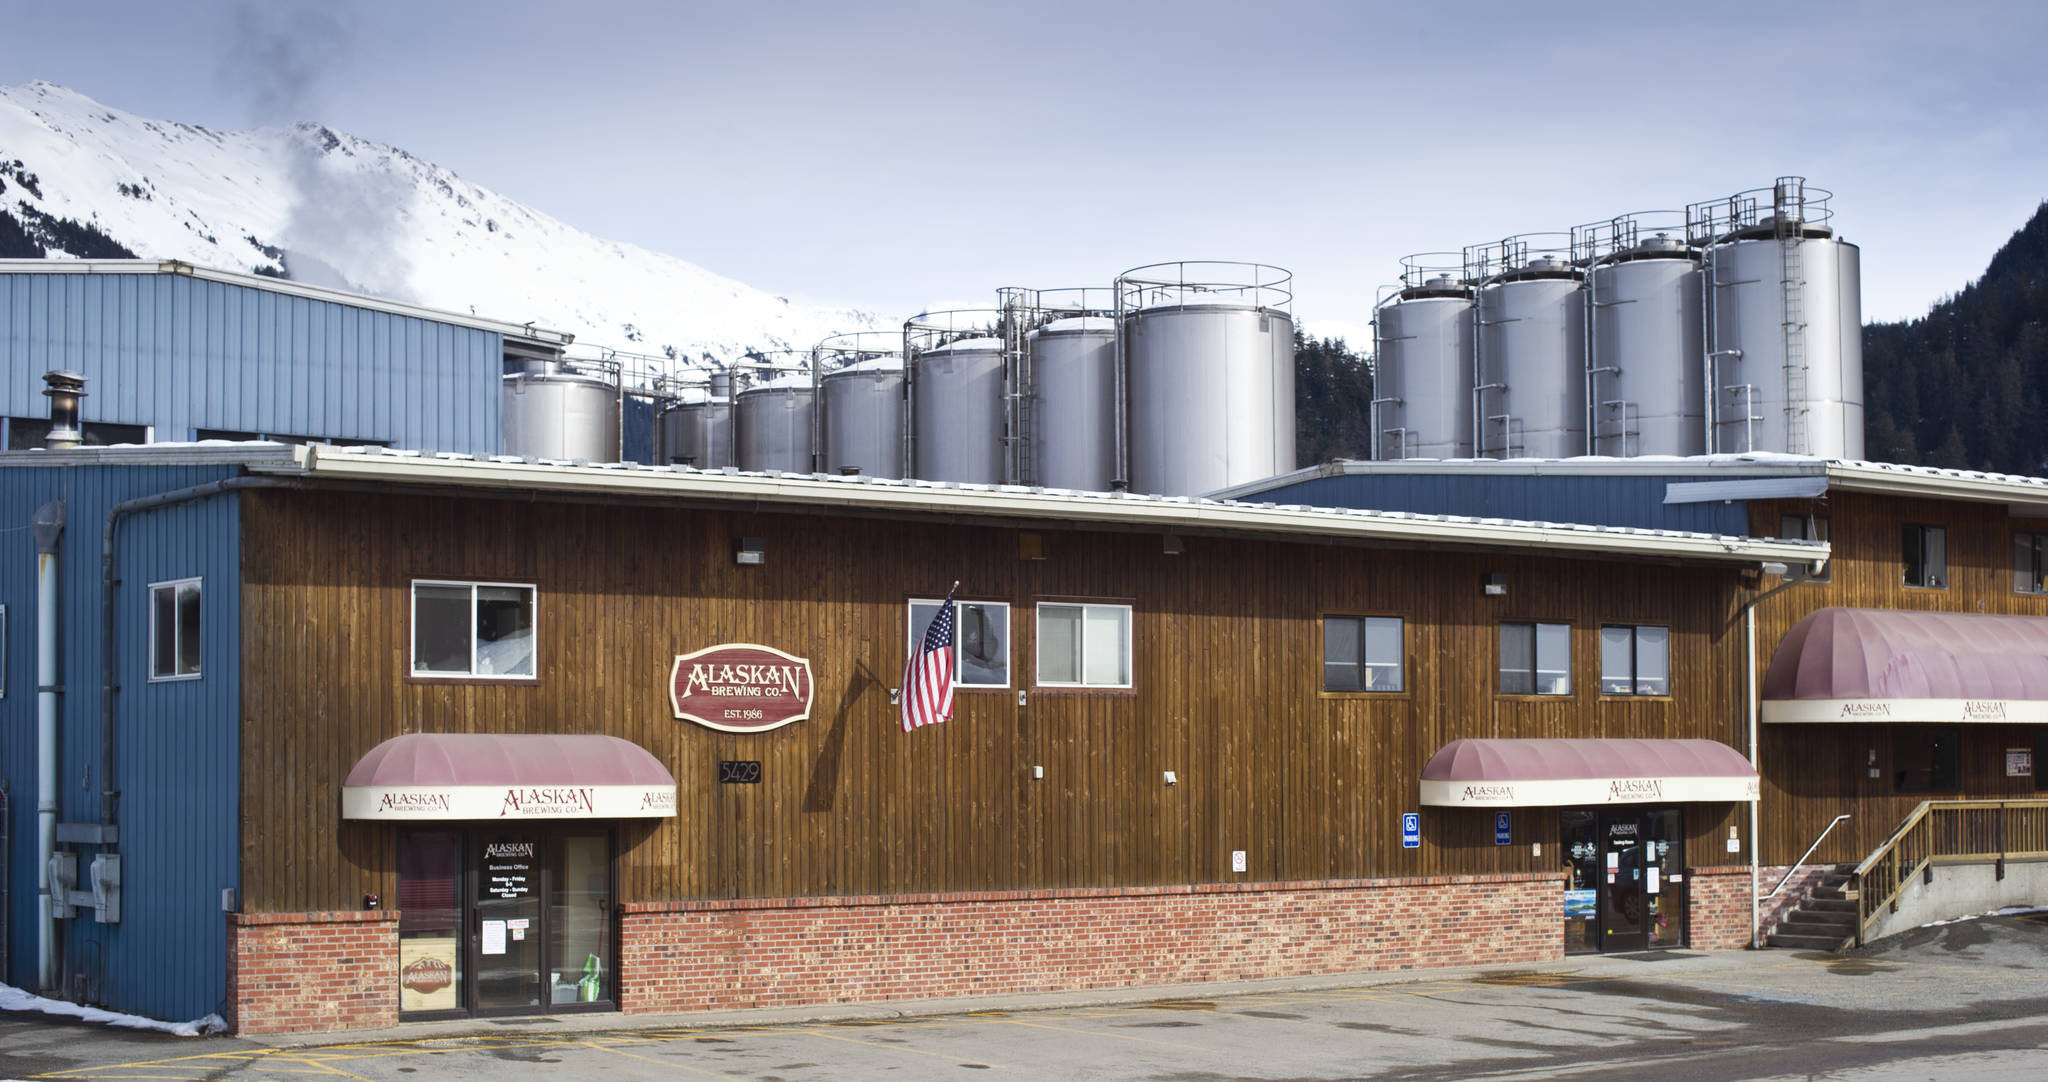 The Alaskan Brewing Company in Juneau, Alaska, on Wednesday, March 22, 2017. (Michael Penn | Juneau Empire)